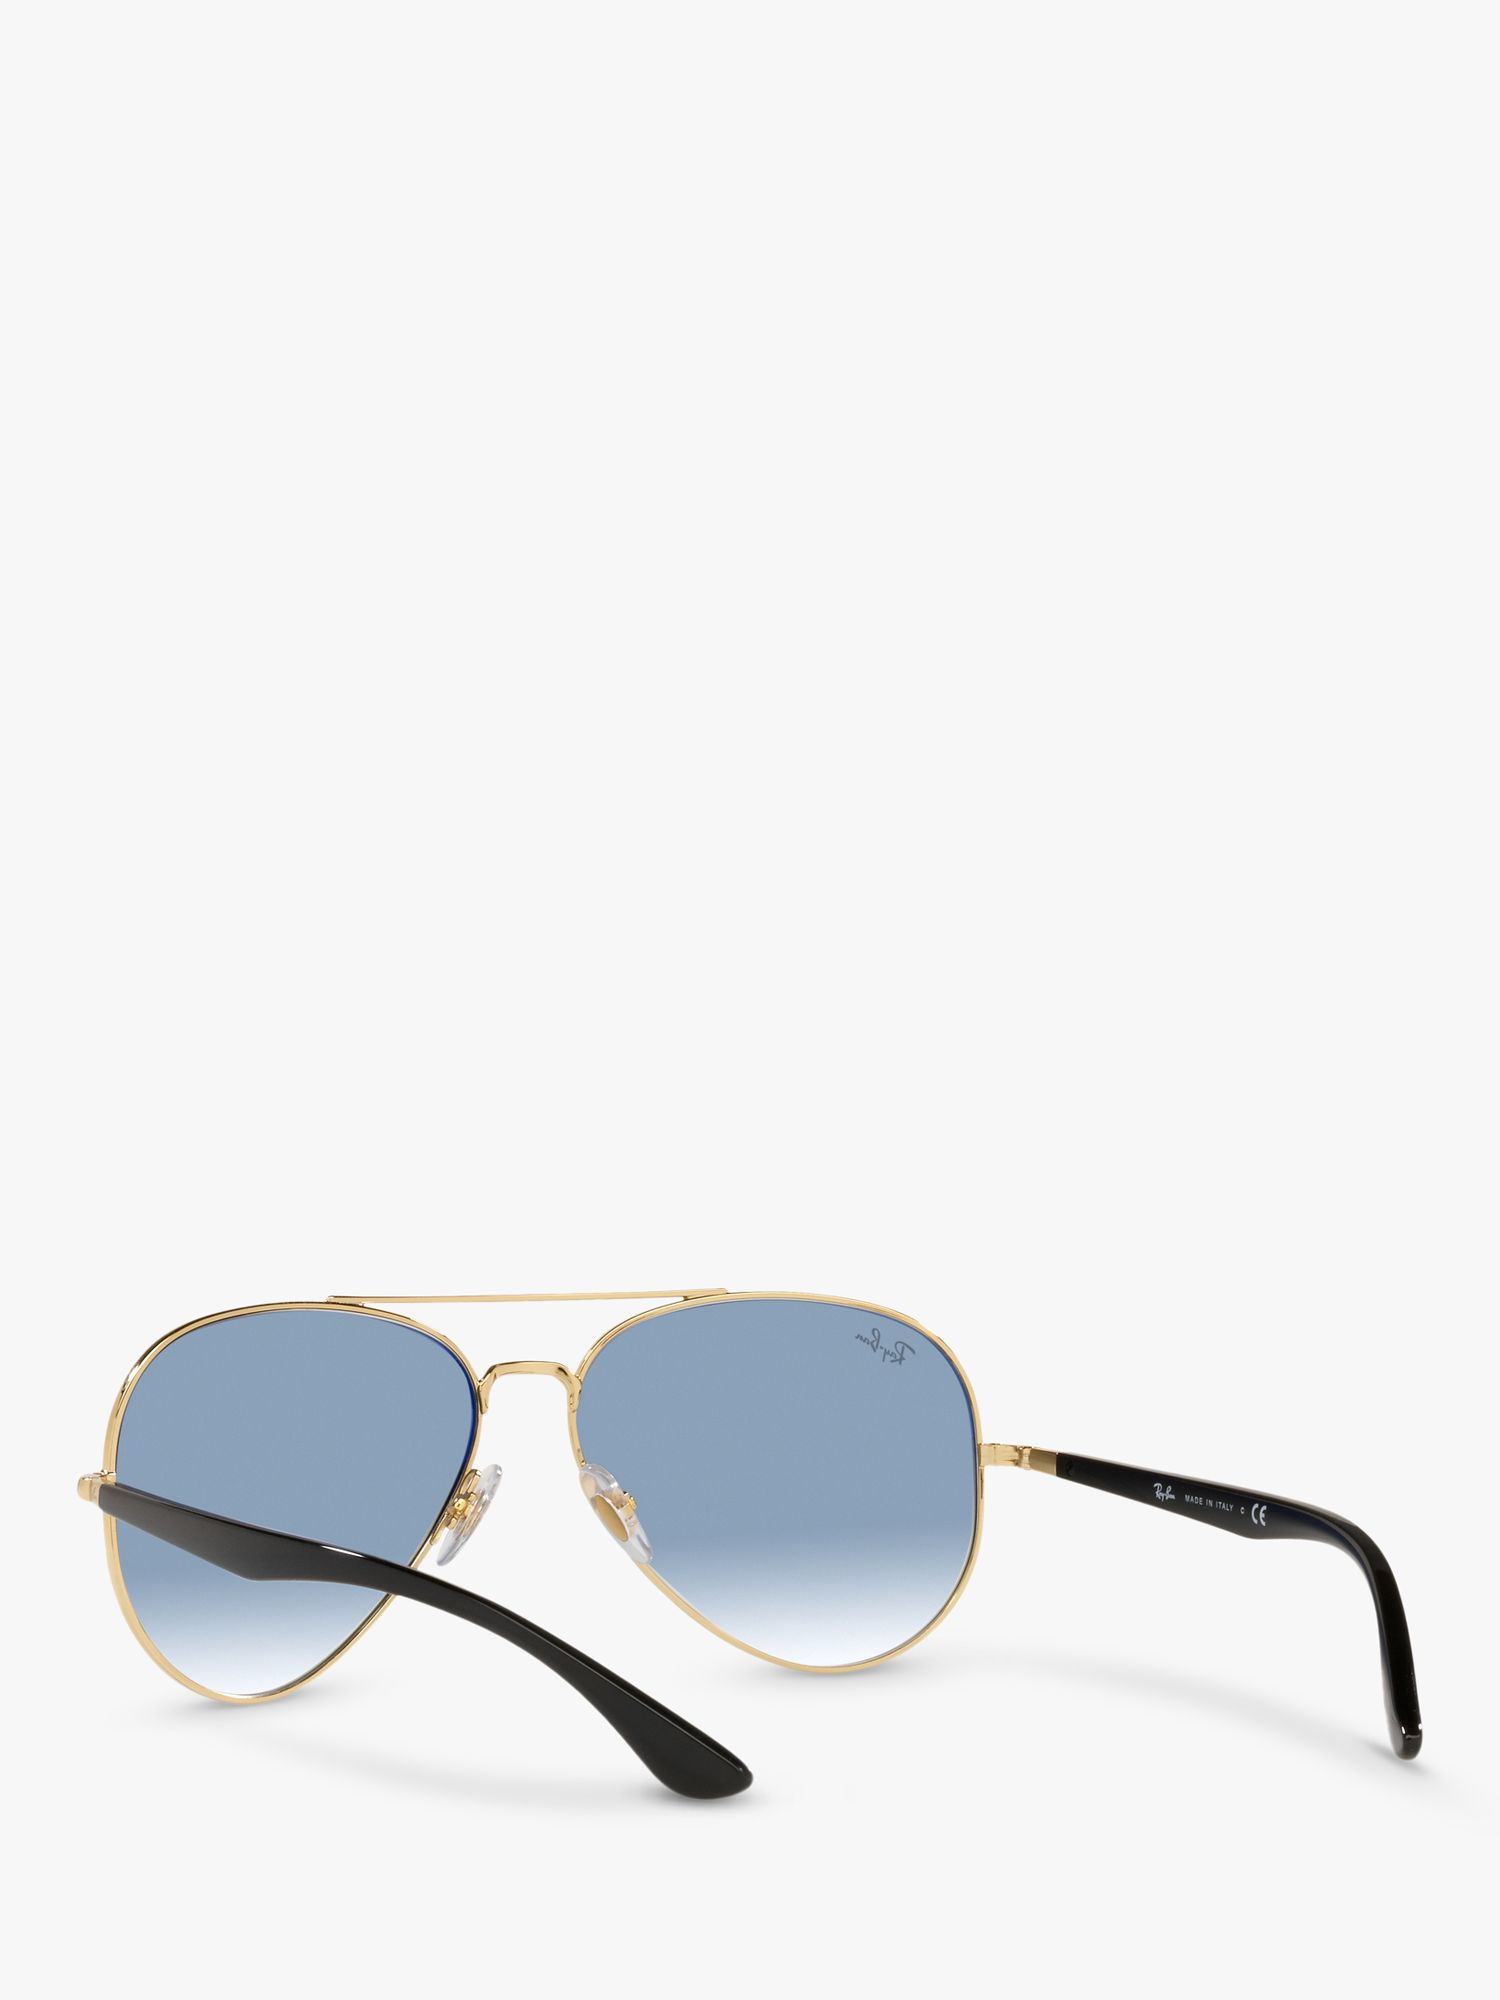 Ray-Ban RB3675 Unisex Aviator Sunglasses, Black Gold/Blue Gradient